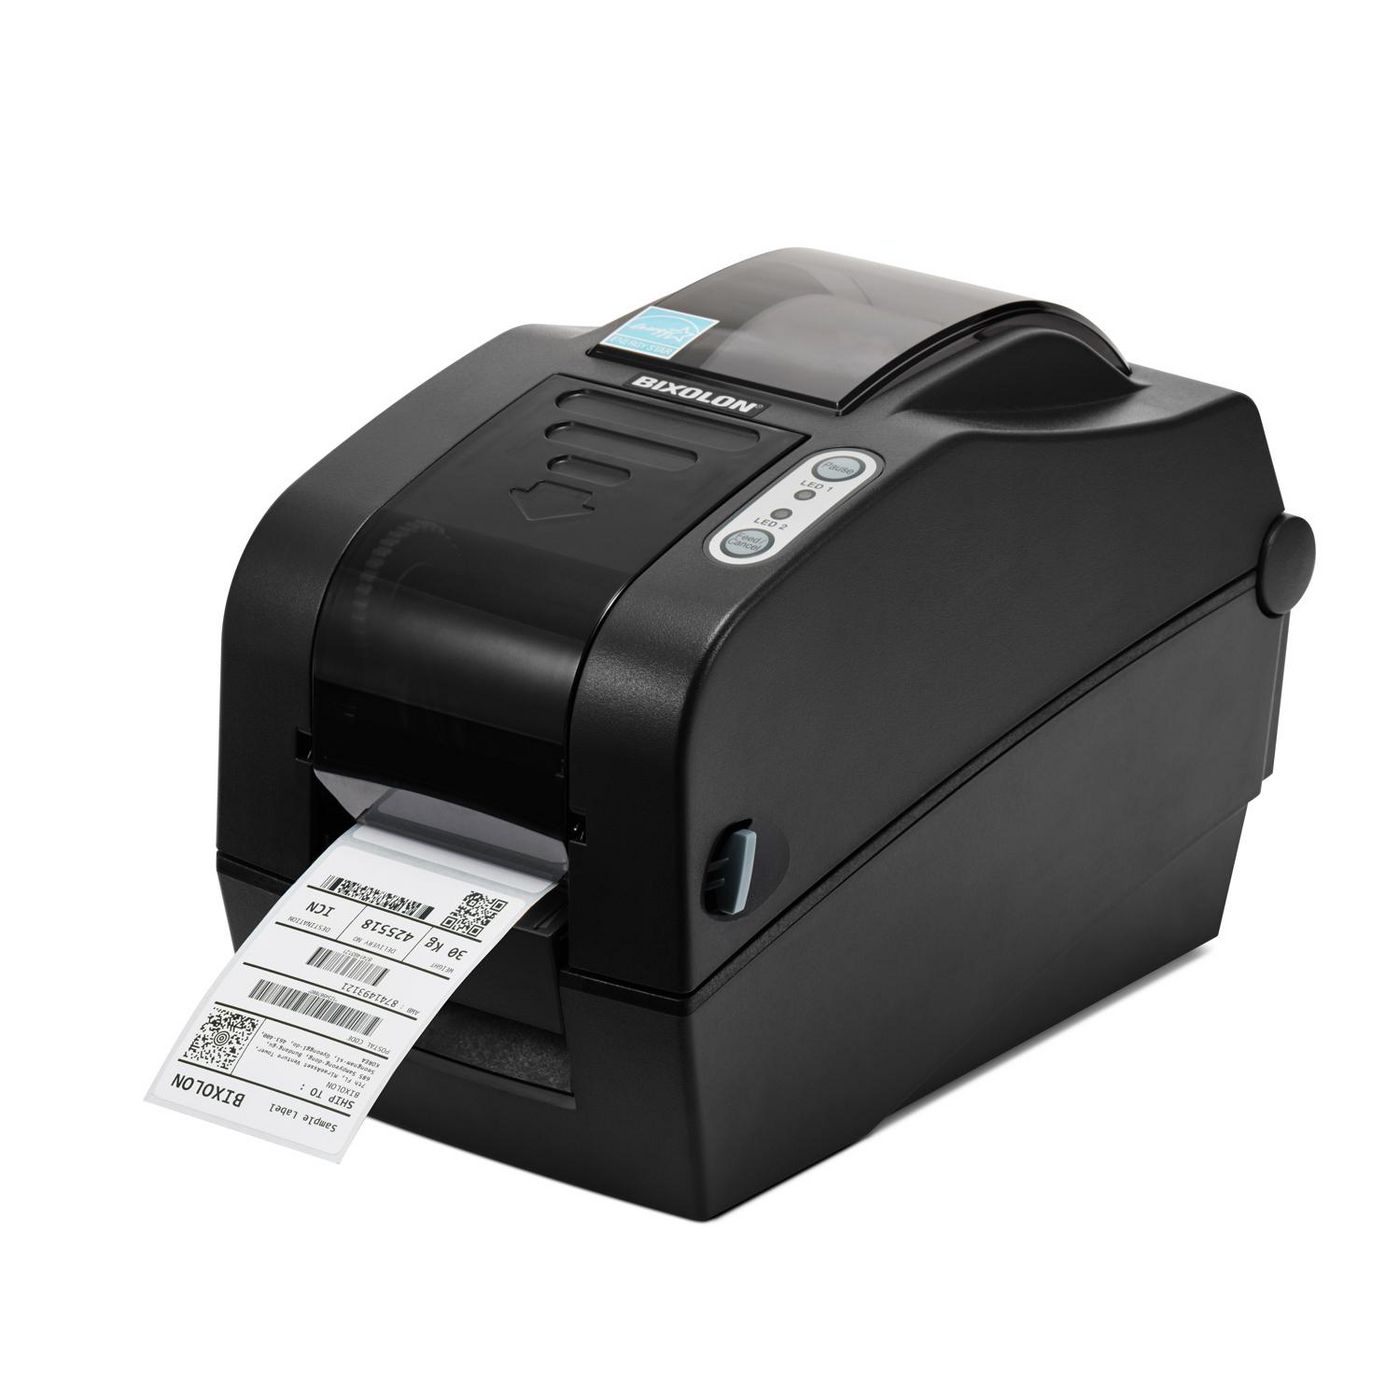 Slp-tx223ceg - Label Printer - Direct Thermal - USB / Serial / Parallel - Dark Grey